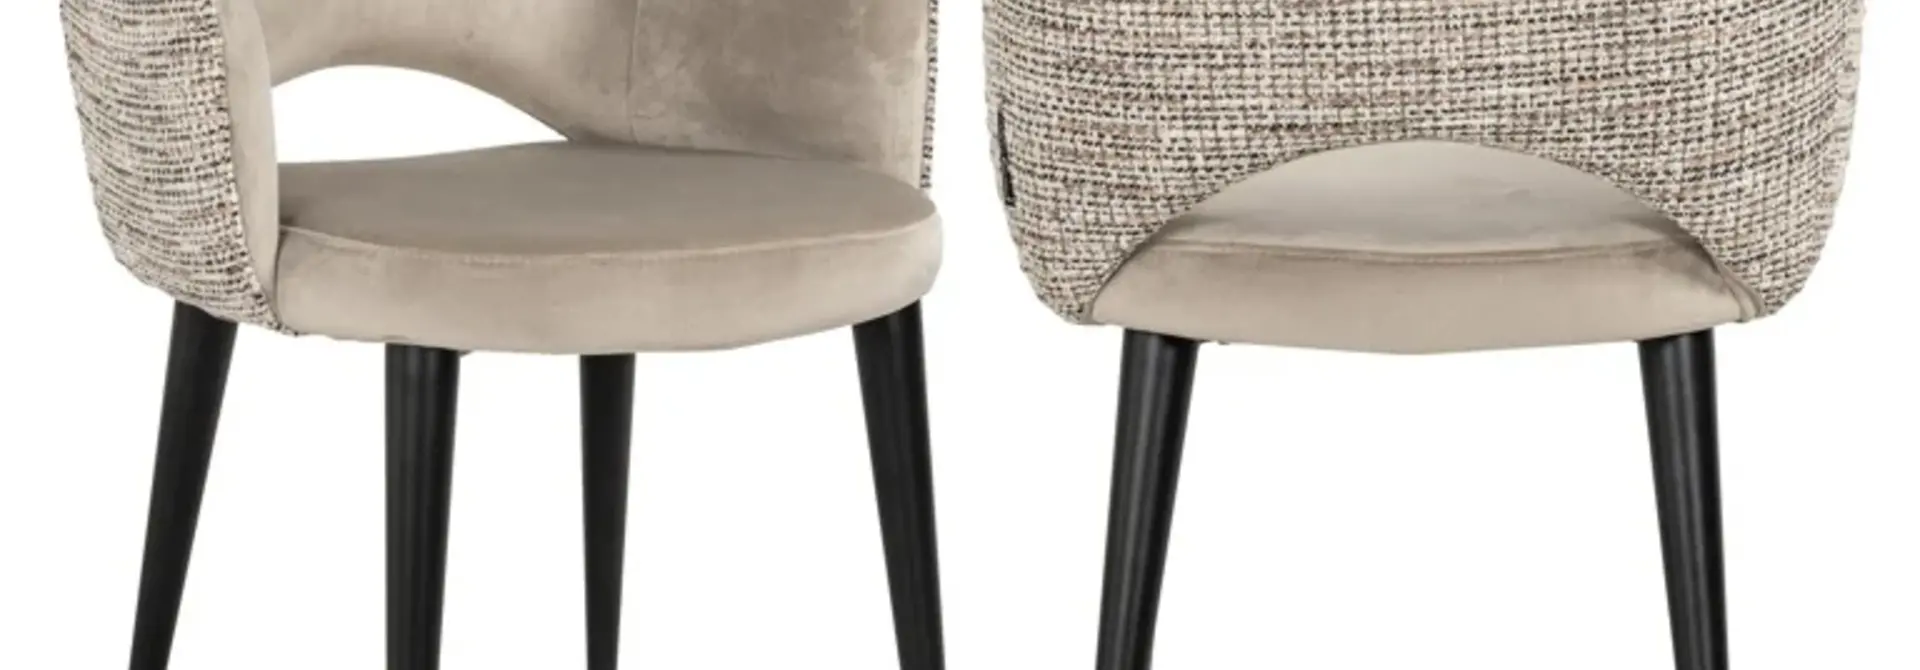 Arm chair Giovanna trendy nature/quartz khaki fire retardant (Be Trendy 01 Nature)